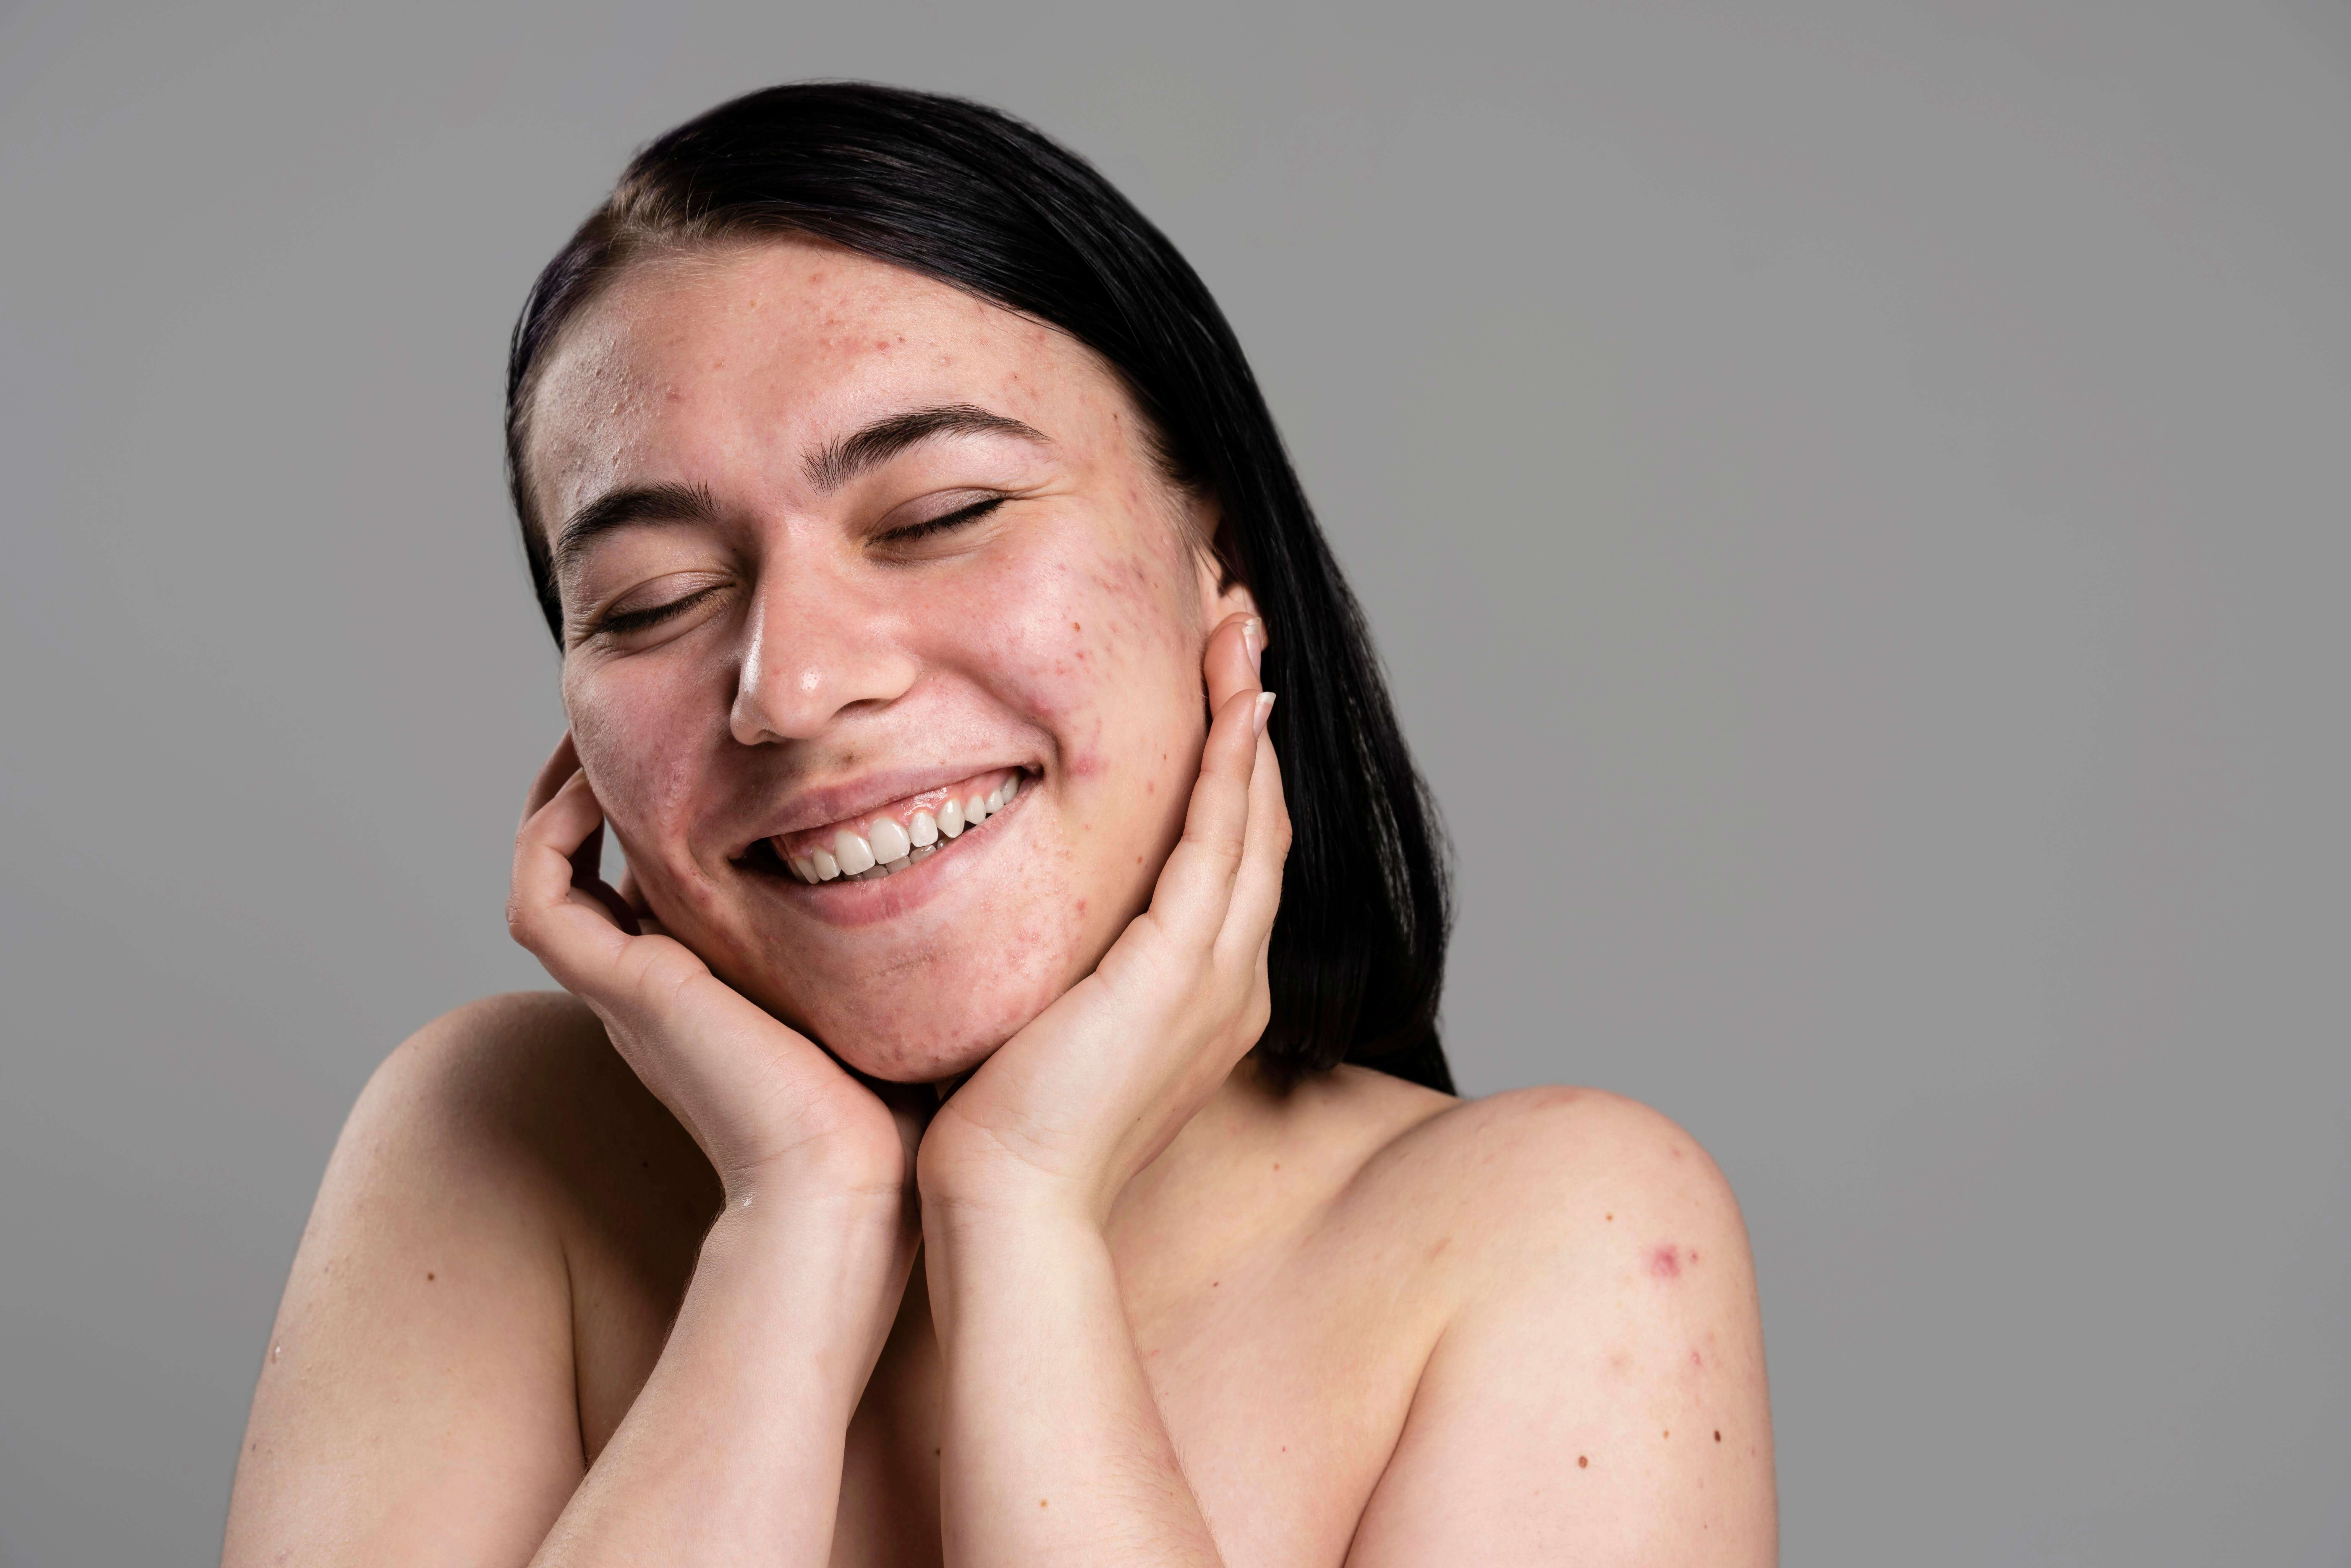 Best Skincare Routine for Acne Prone Skin